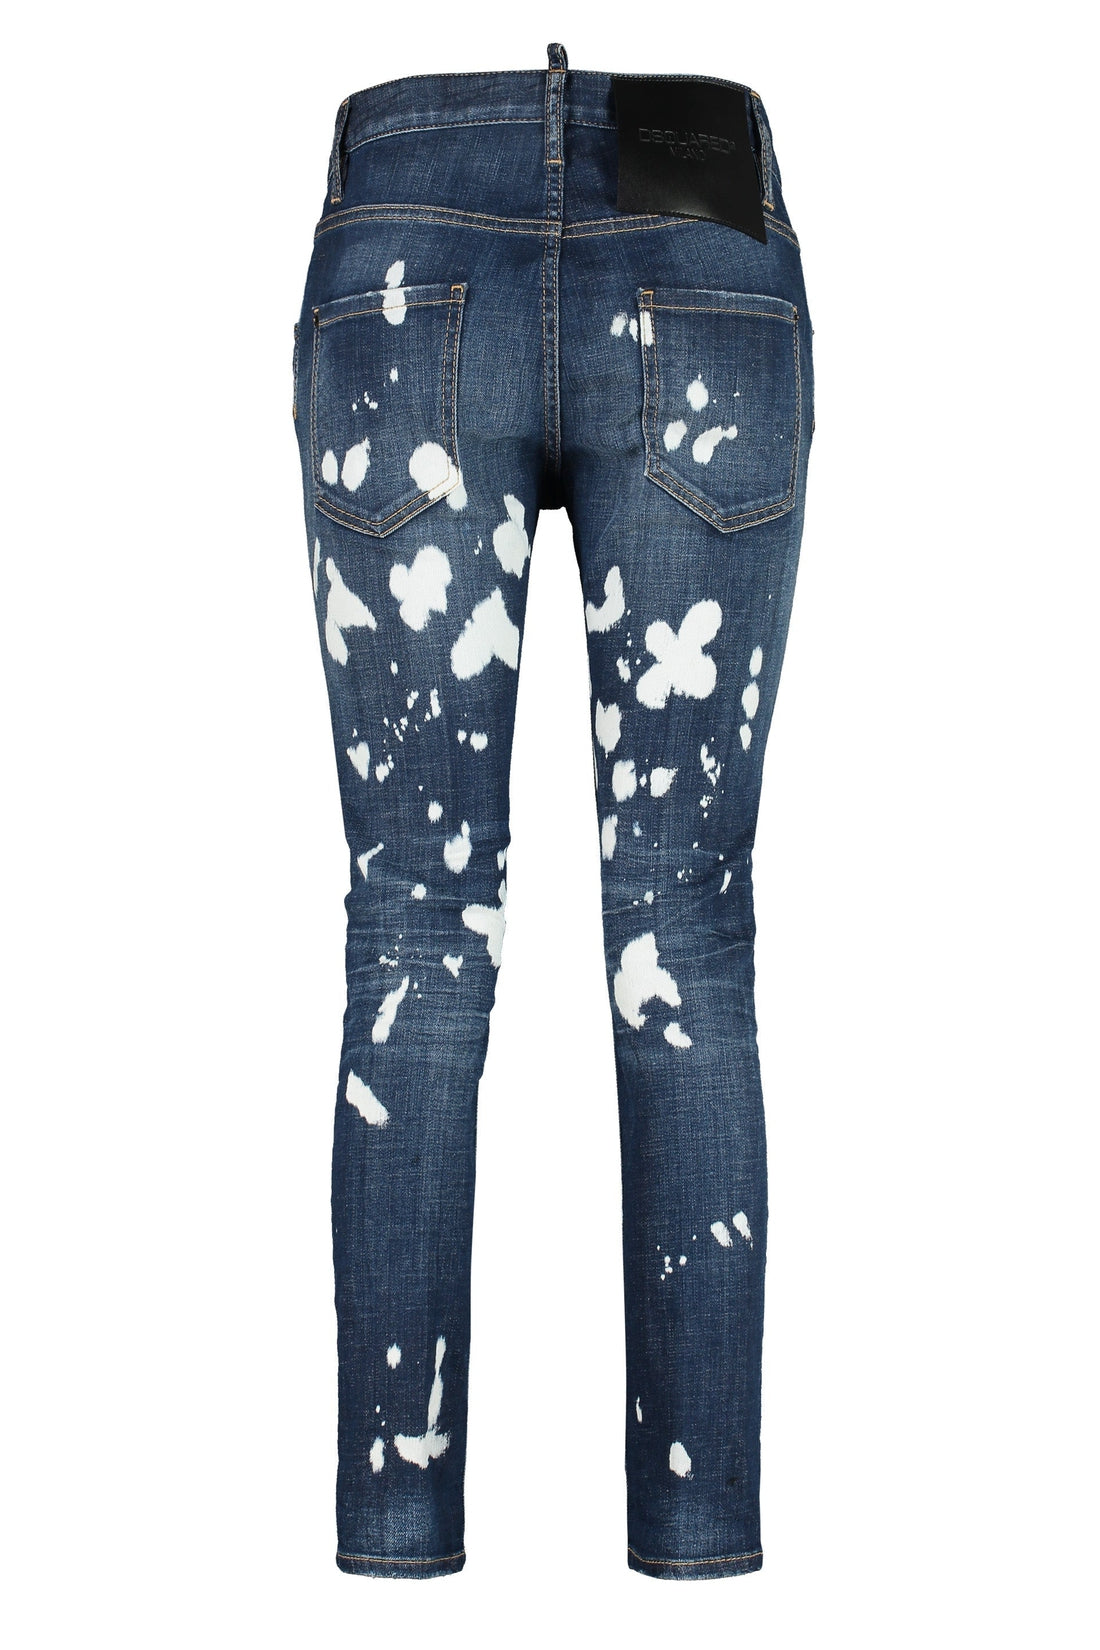 Dsquared2-OUTLET-SALE-Cool Girl Jean 5-pocket jeans-ARCHIVIST